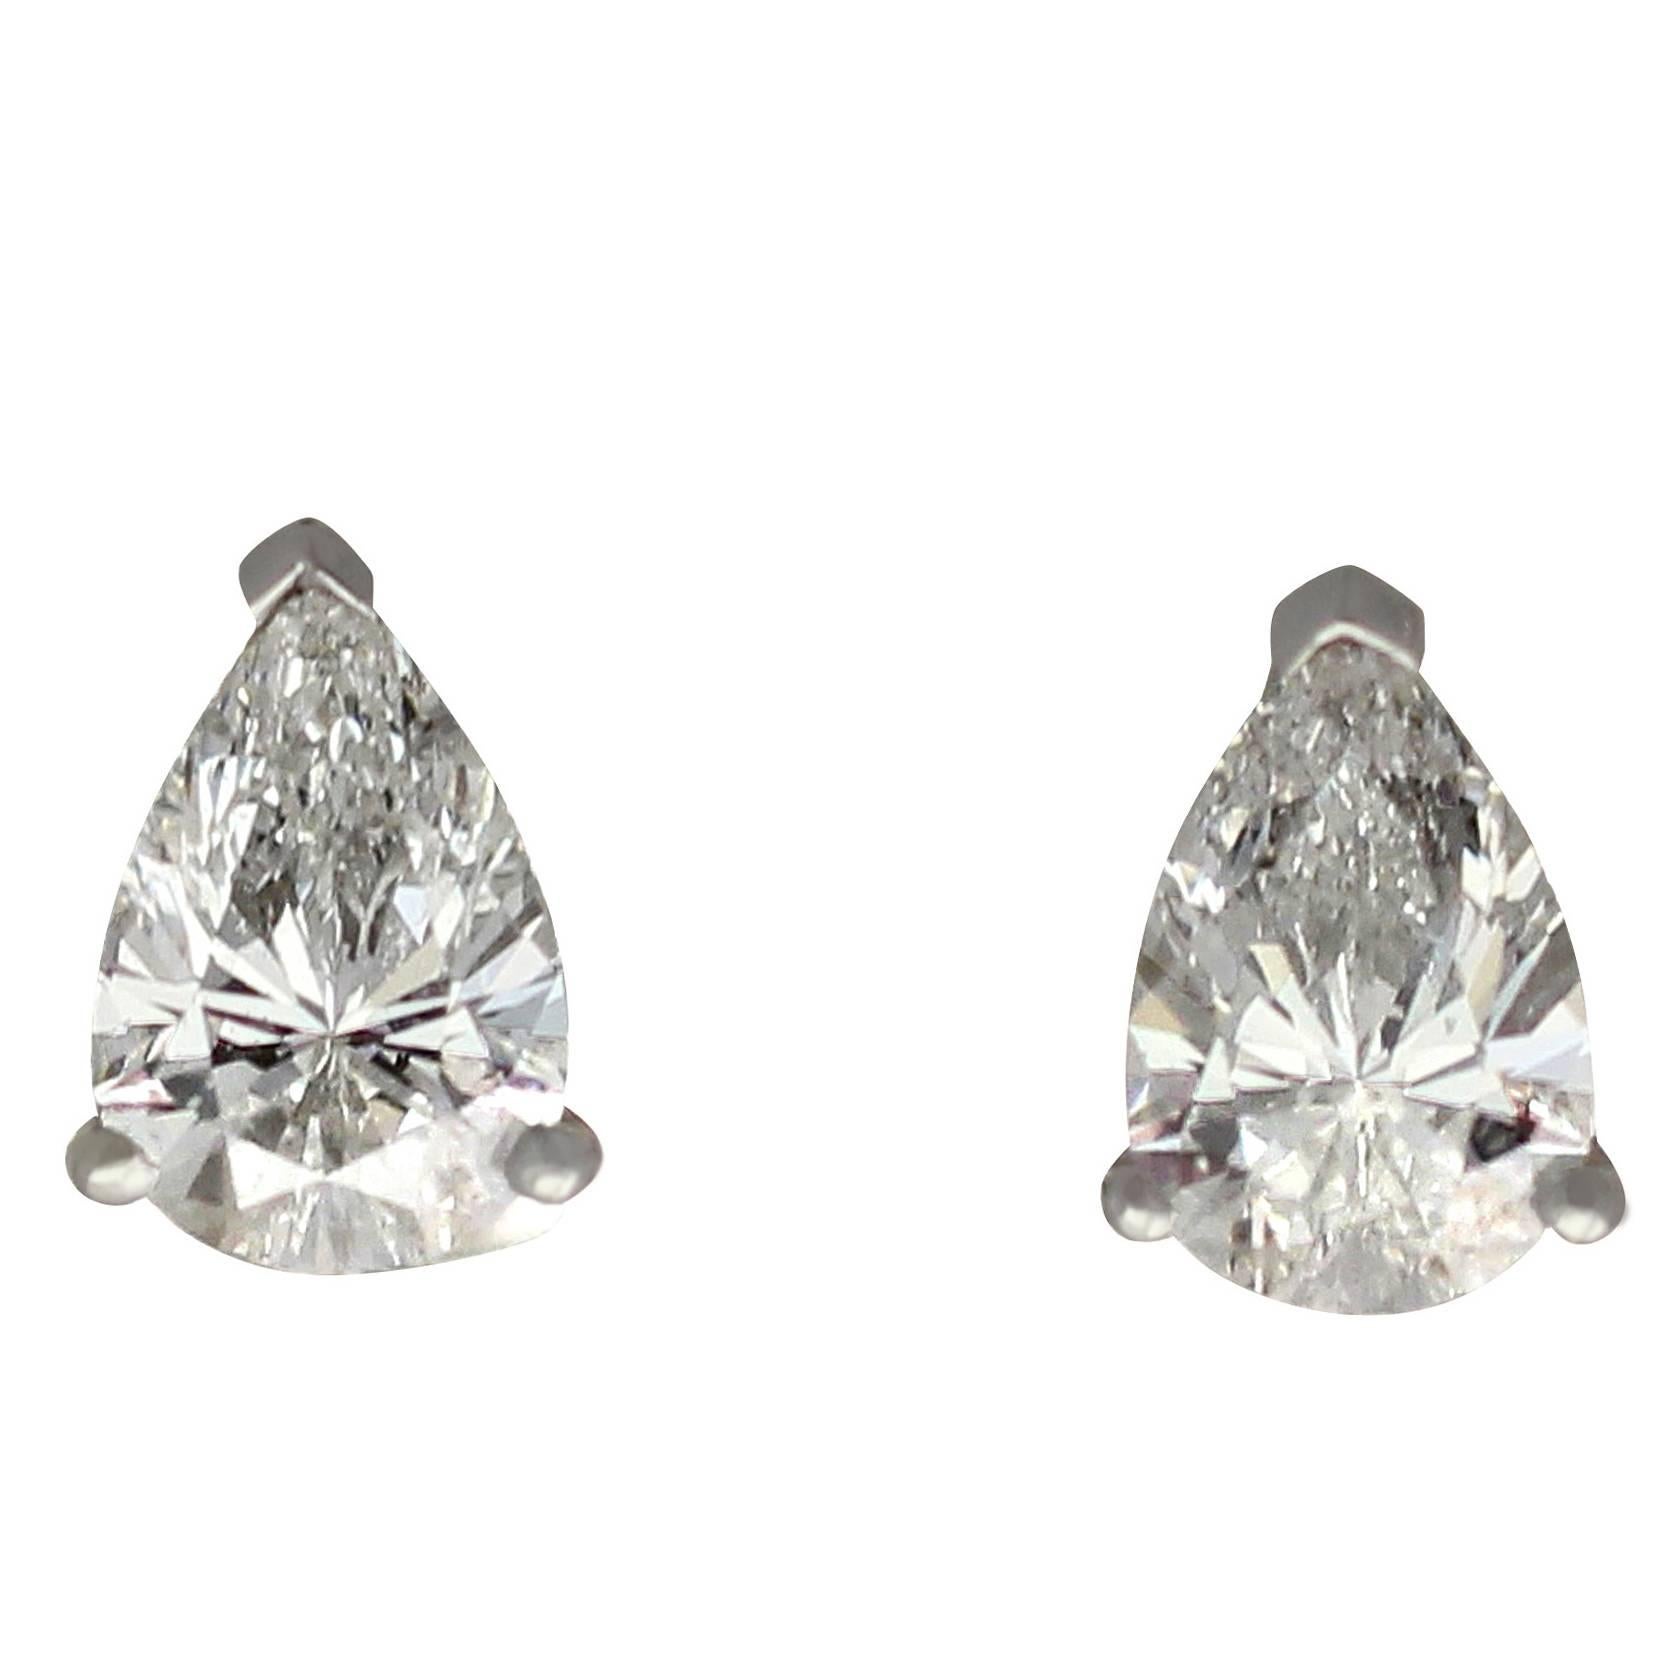 1.15Ct Pear Cut Diamond and Platinum Stud Earrings - Contemporary Circa 2000